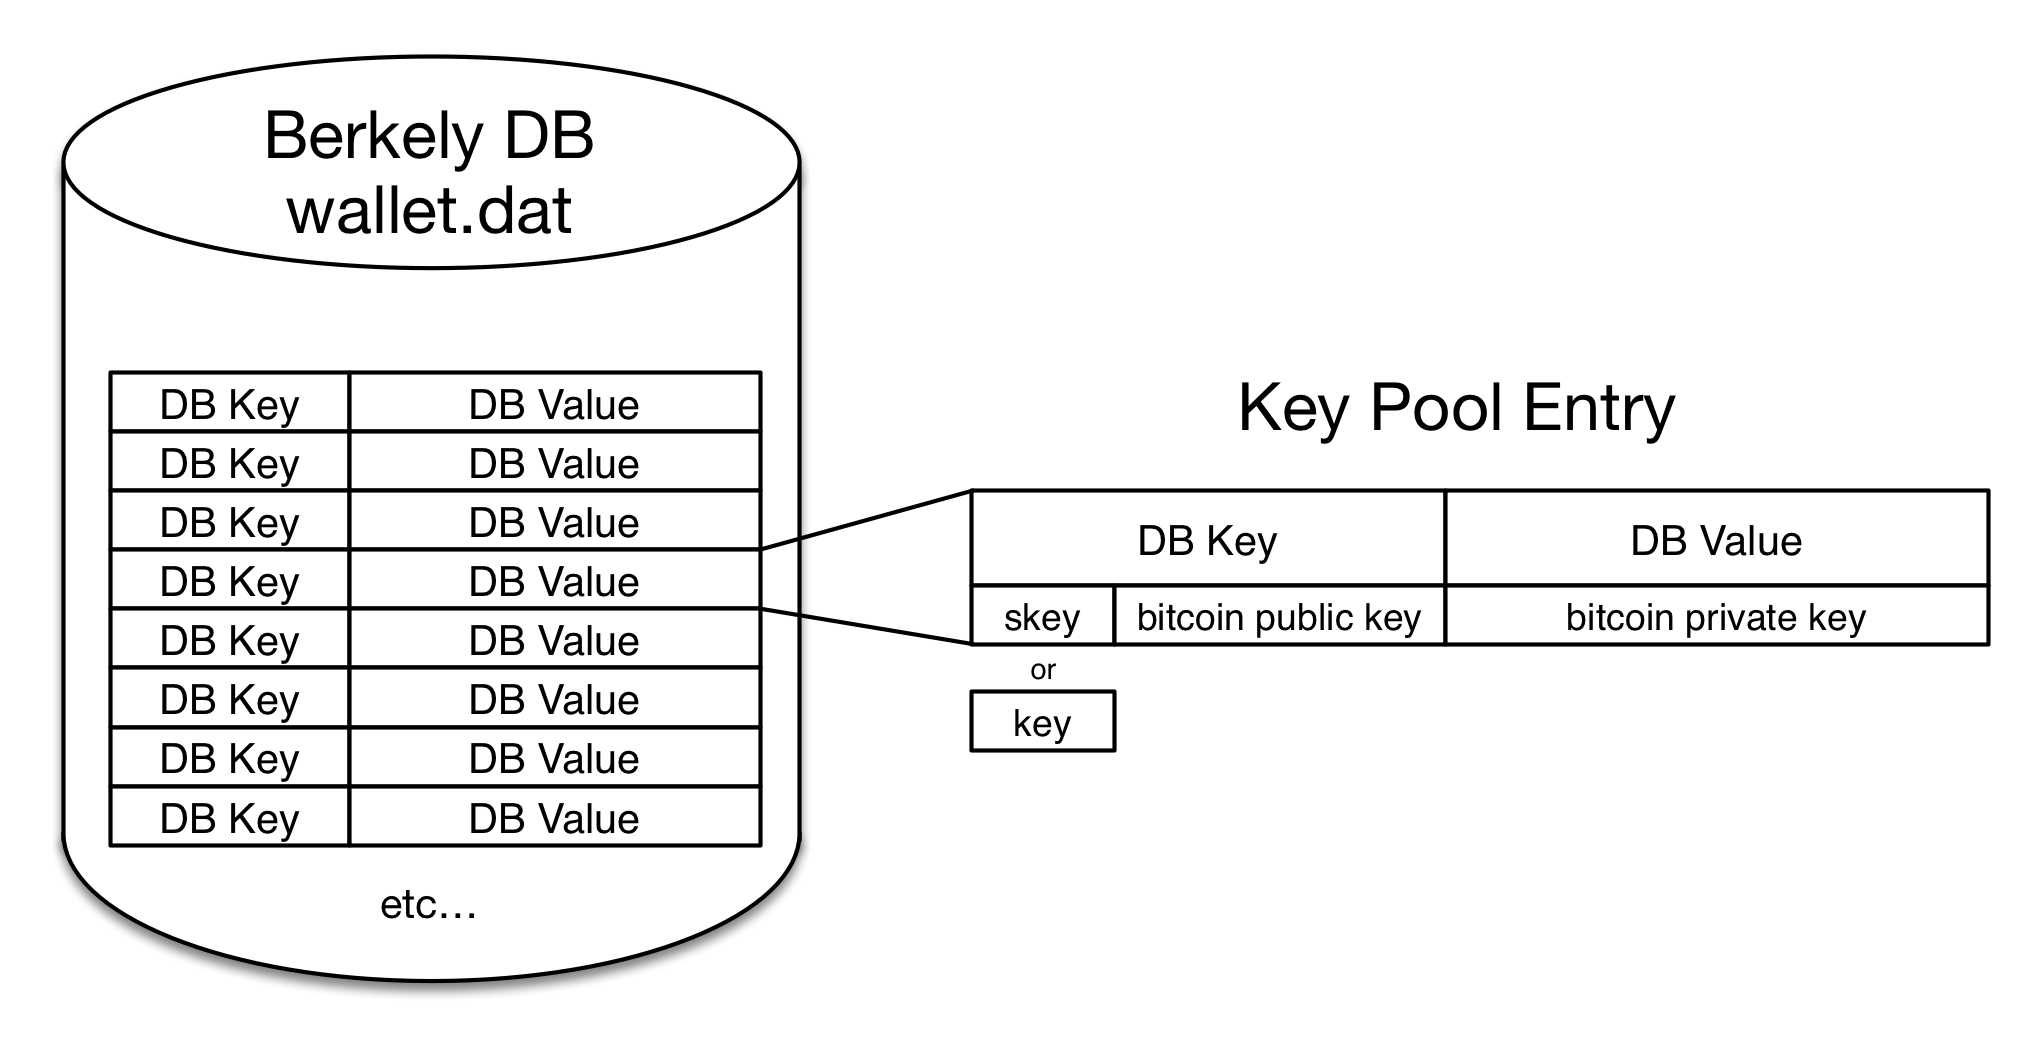 Bitcoin wallet key pool storage